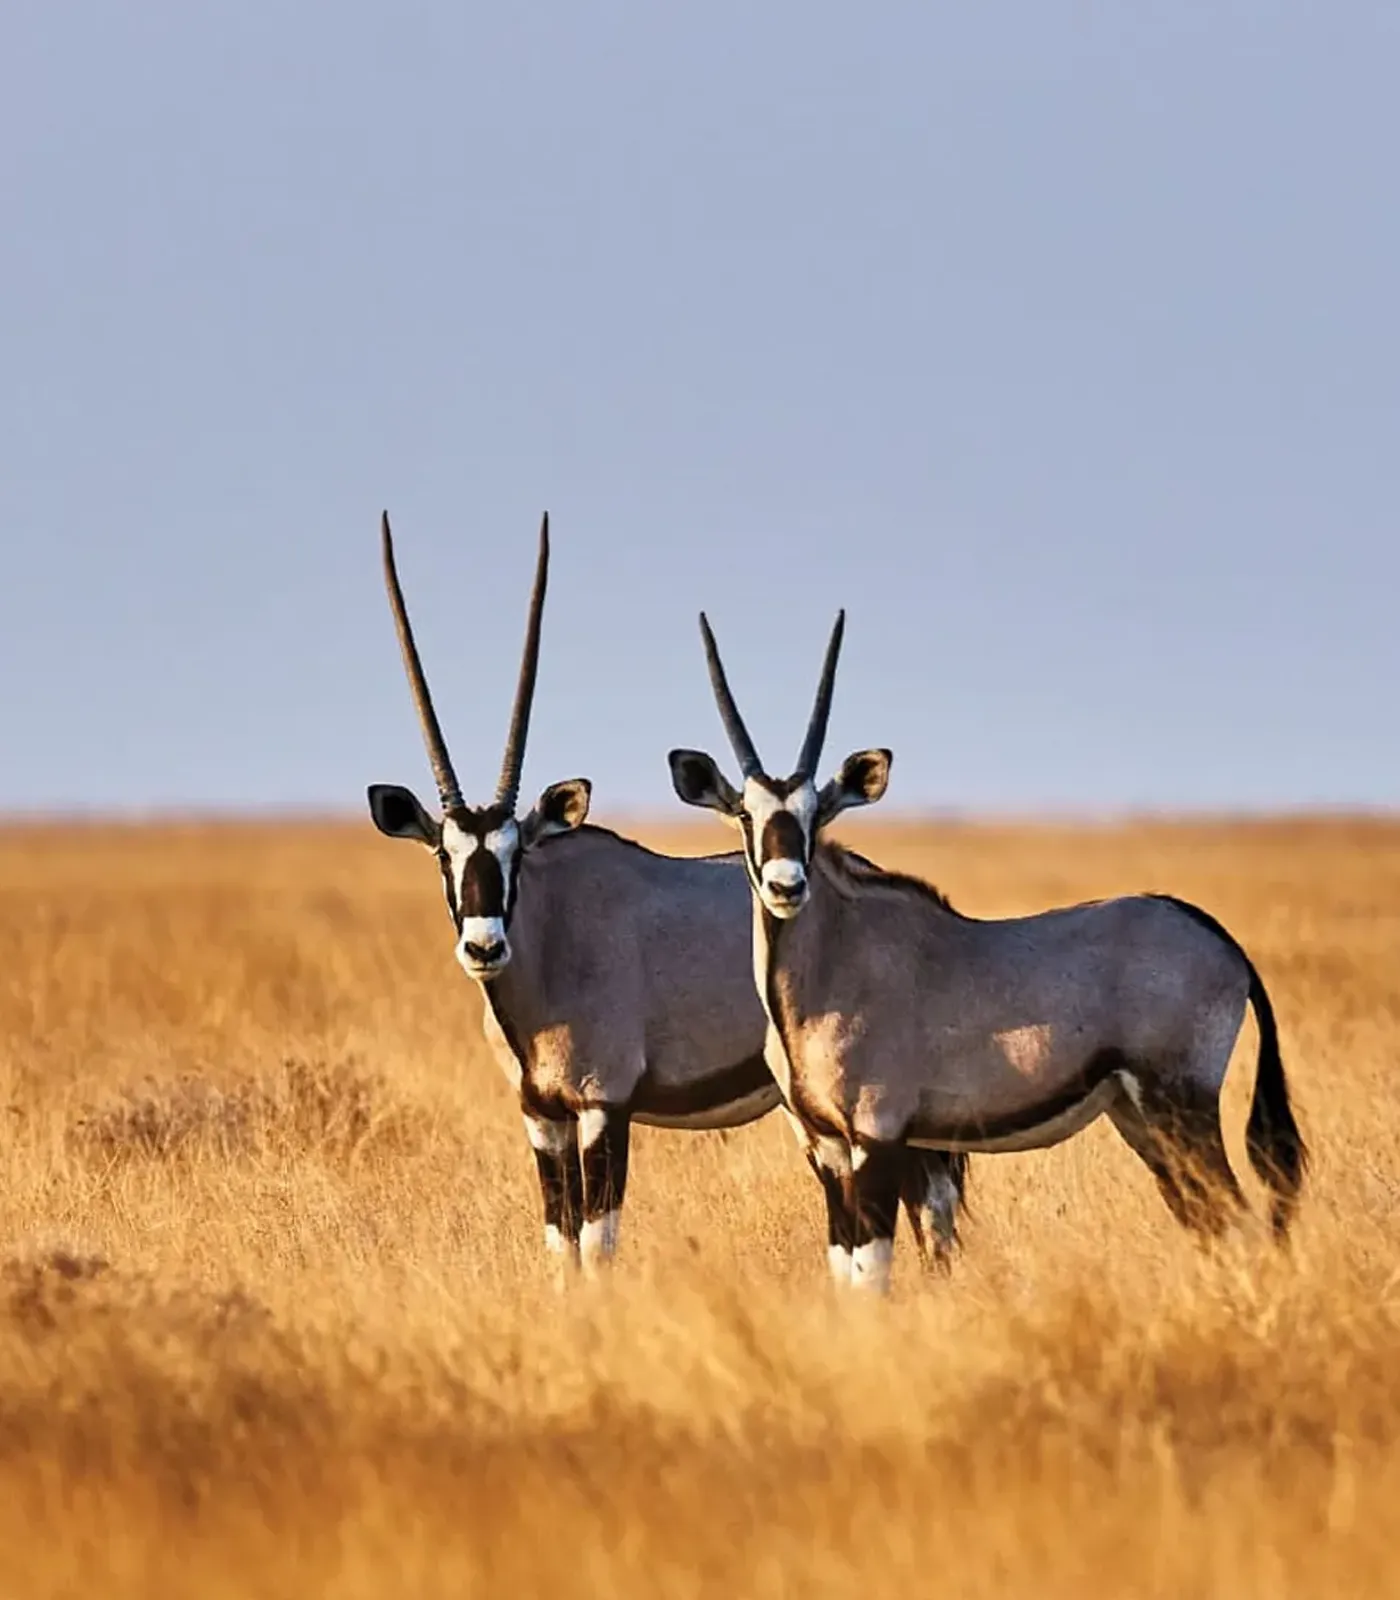 hunting safari africa prices